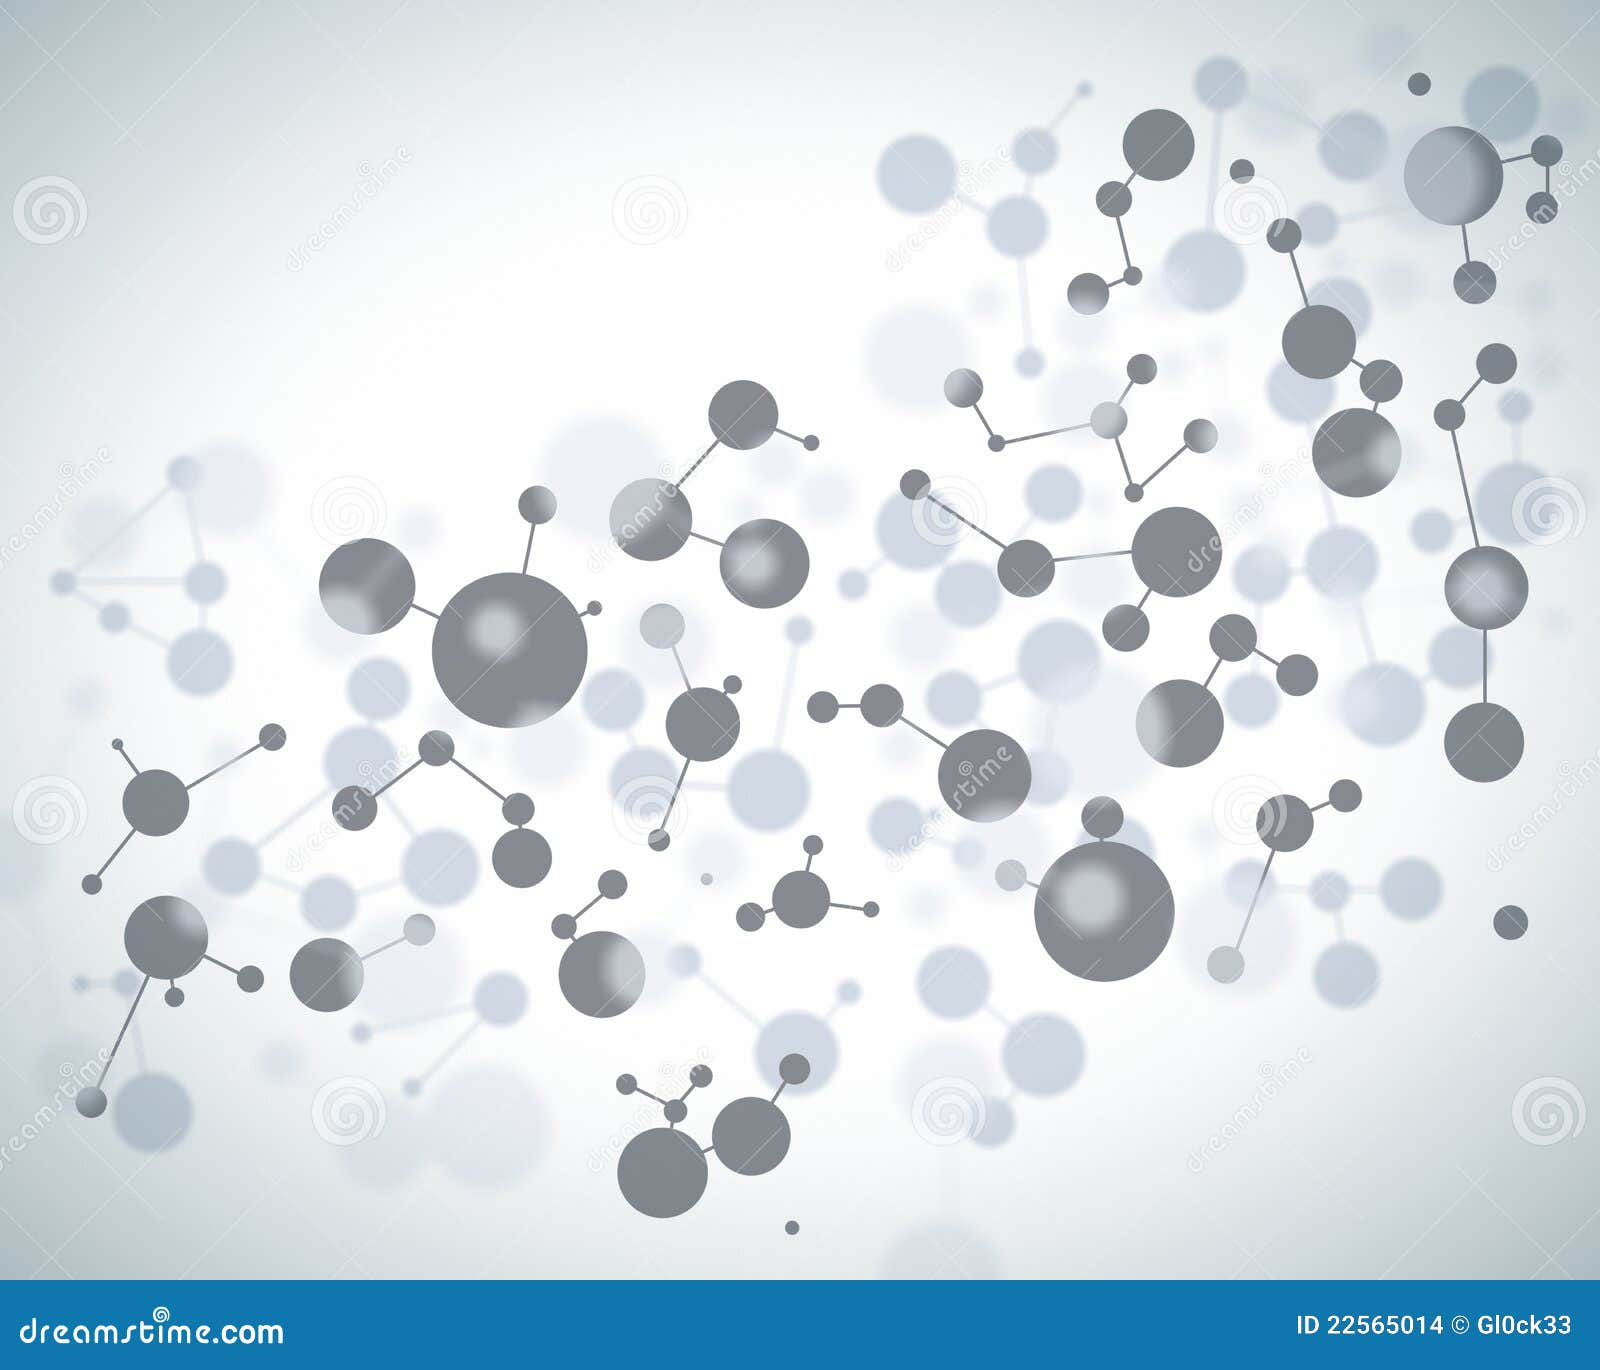 Chemistry background stock illustration. Illustration of helix - 22565014